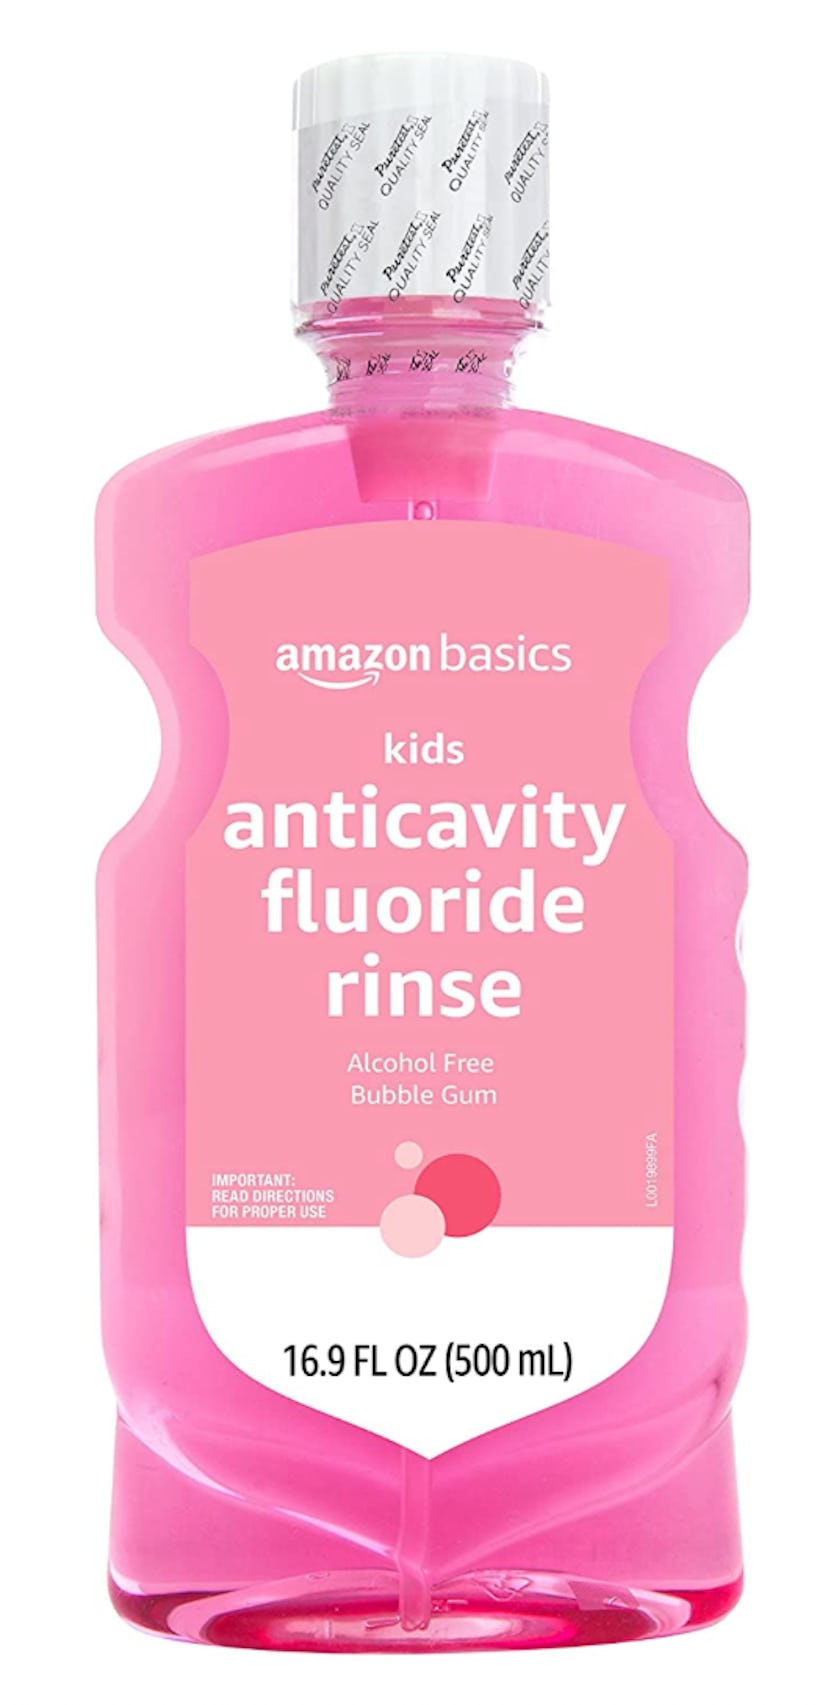 Amazon Basics Kids Anticavity Fluoride Rinse, Alcohol Free, Bubble Gum